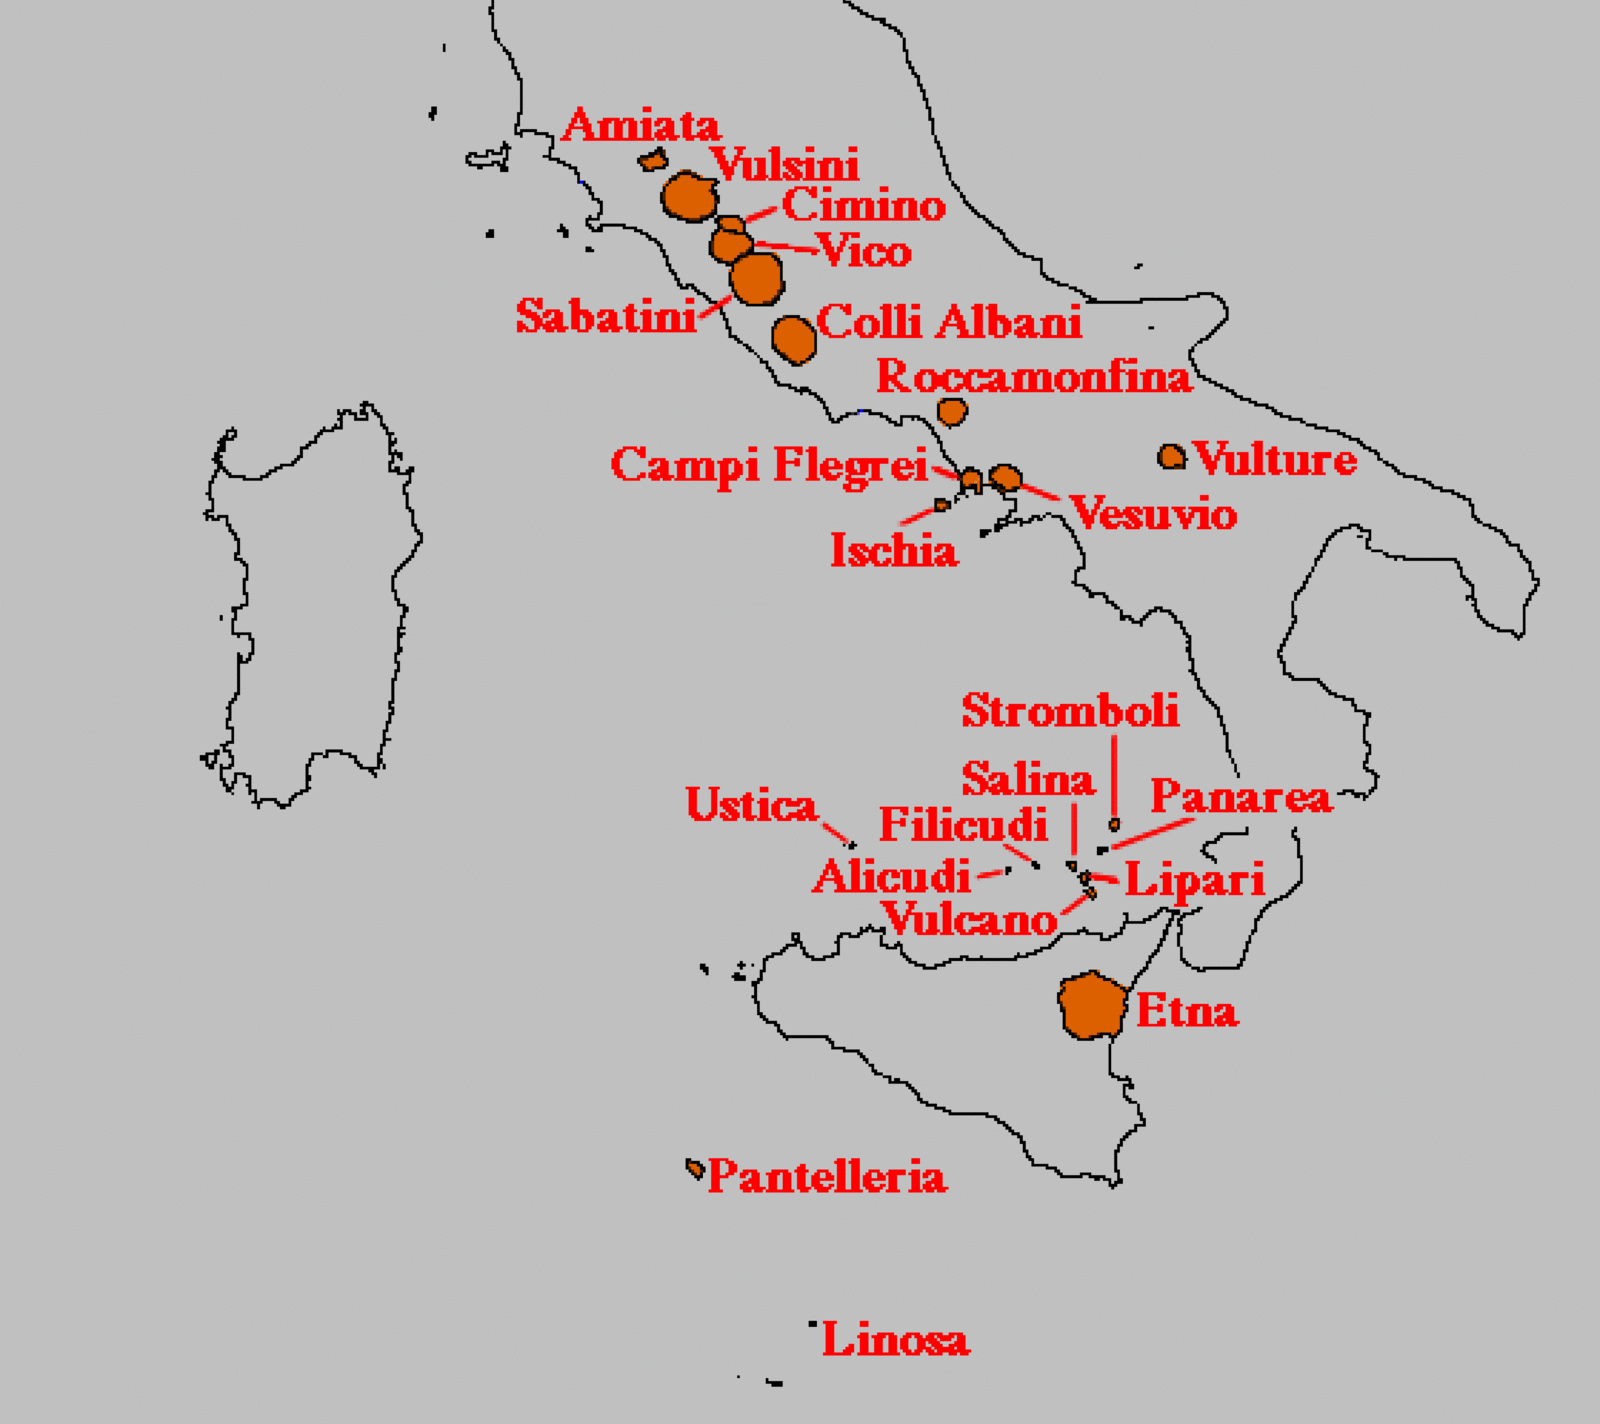 Italian volcanism - The Vulsini complex is northwest of the land.